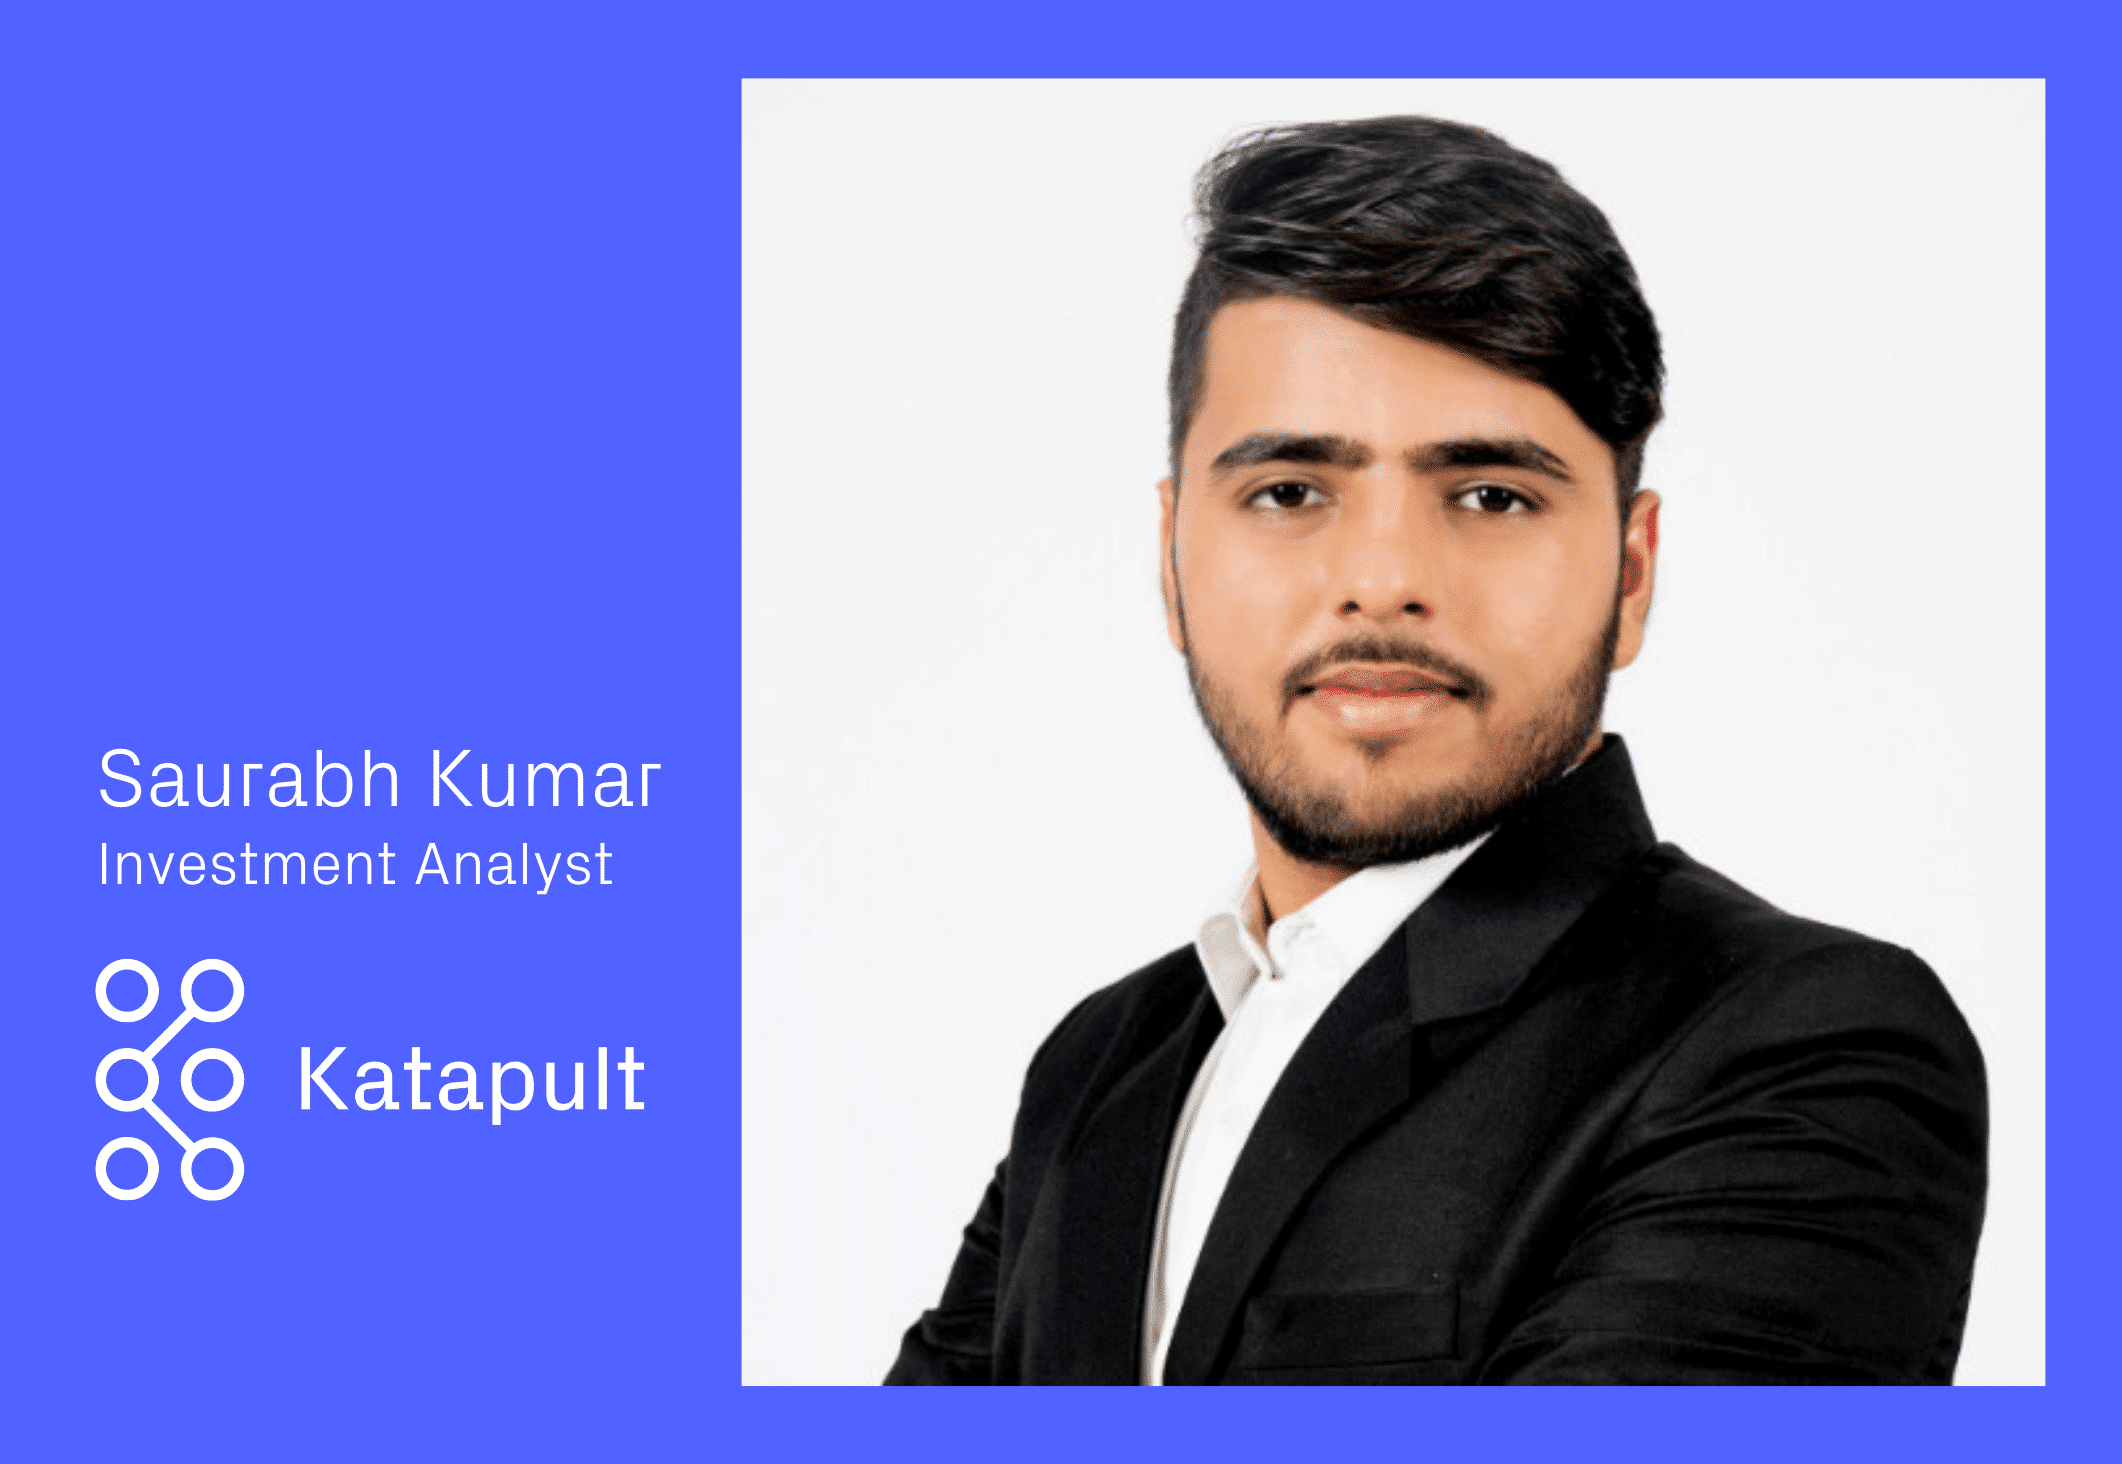 Saurabh Kumar Investment Analyst